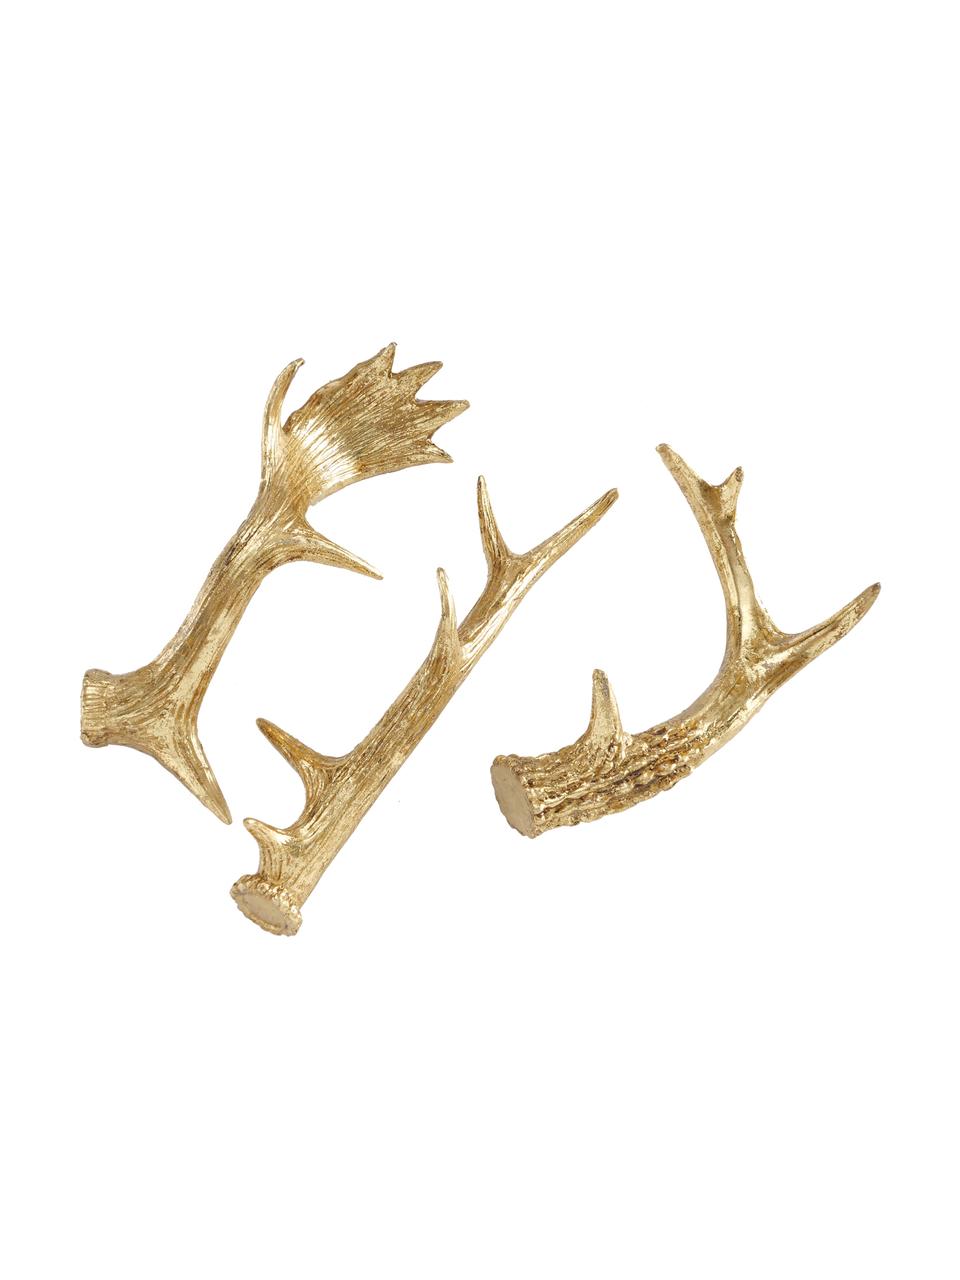 Sada dekorací Deer, 3 díly, Syntetická pryskyřice, Zlatá, Sada s různými velikostmi